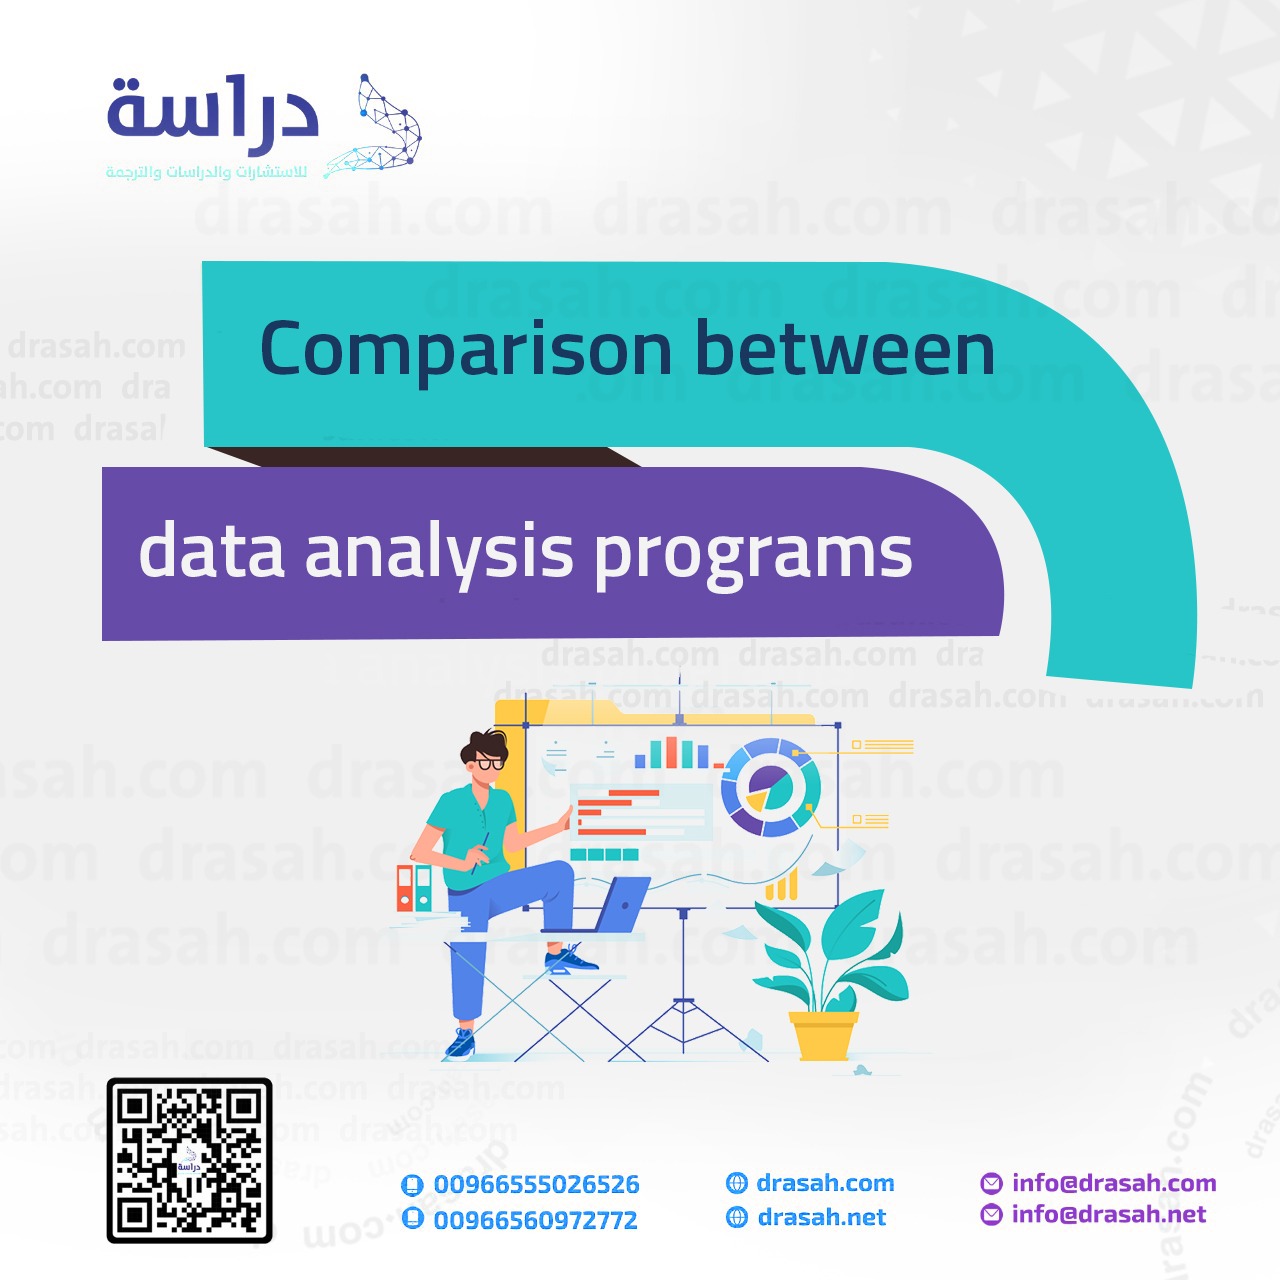 Comparison between data analysis programs